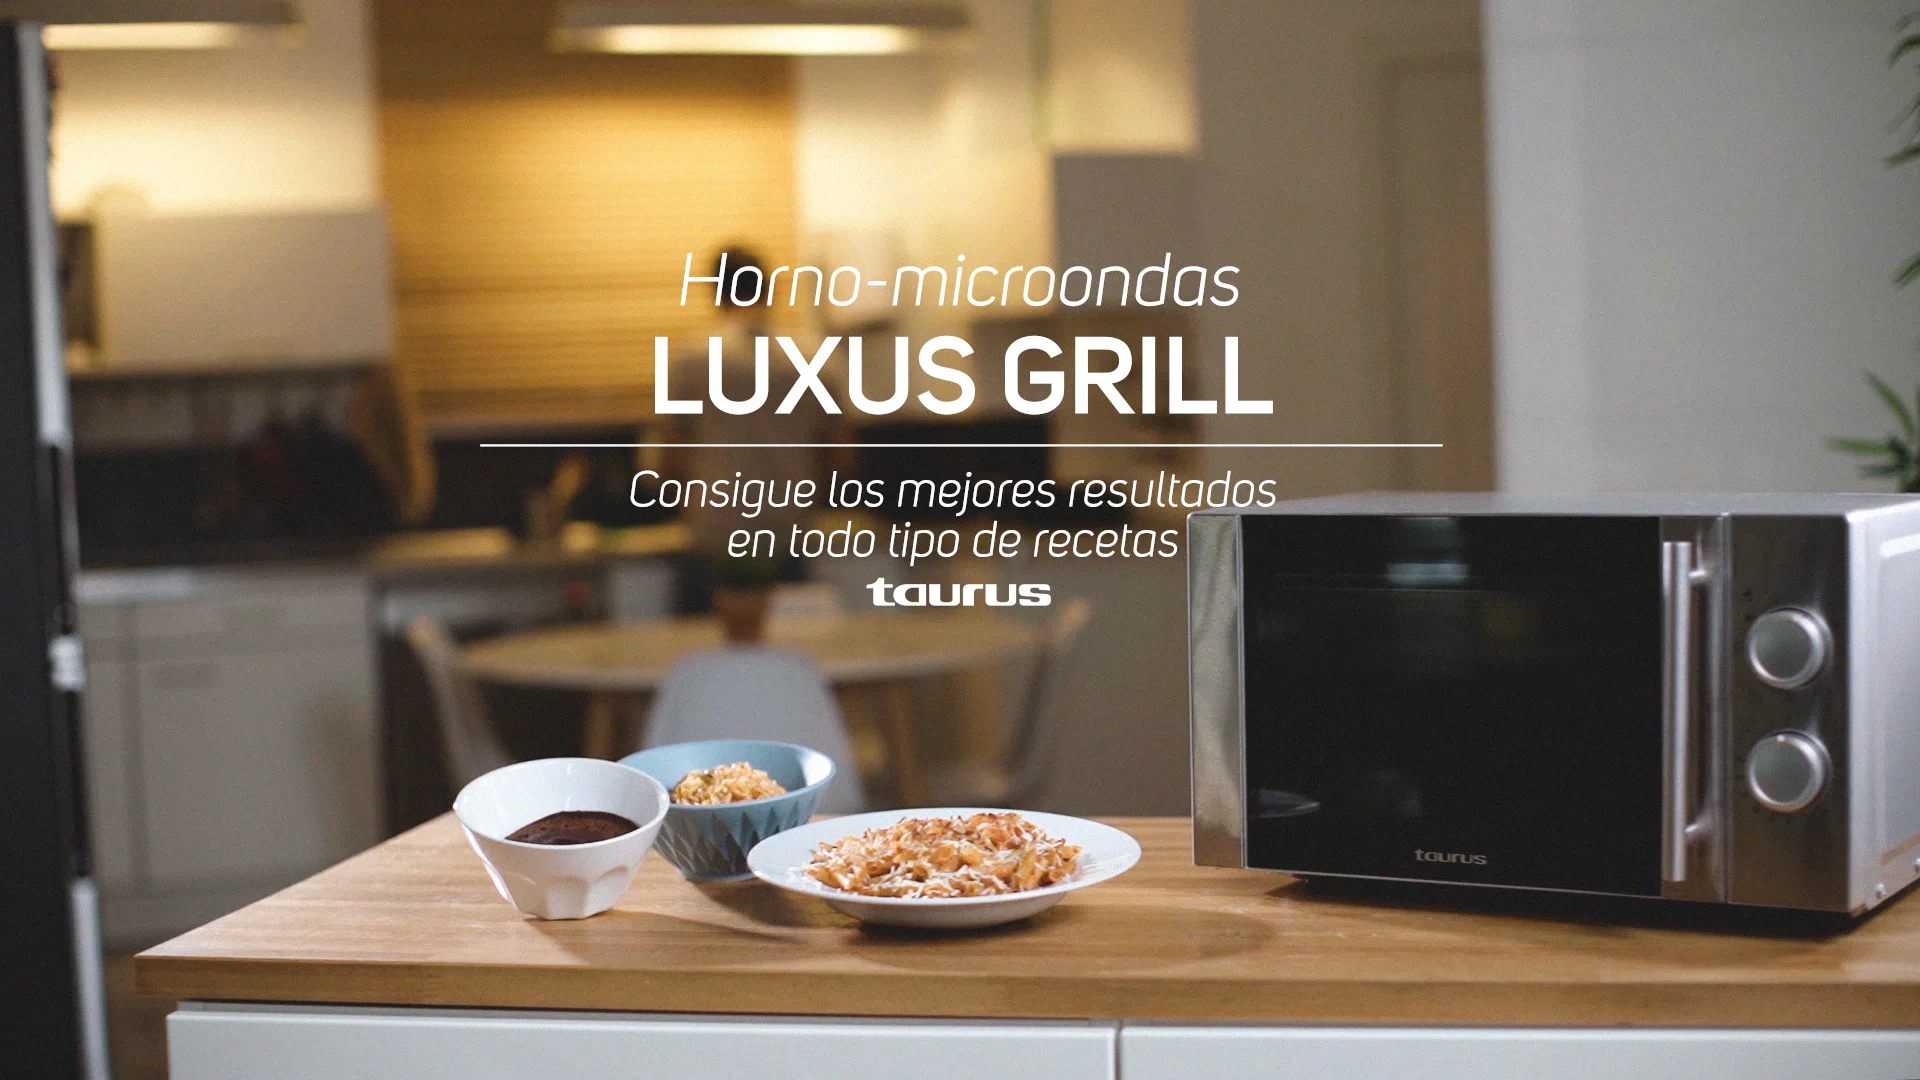 Horno-Microondas Luxus Grill on Vimeo